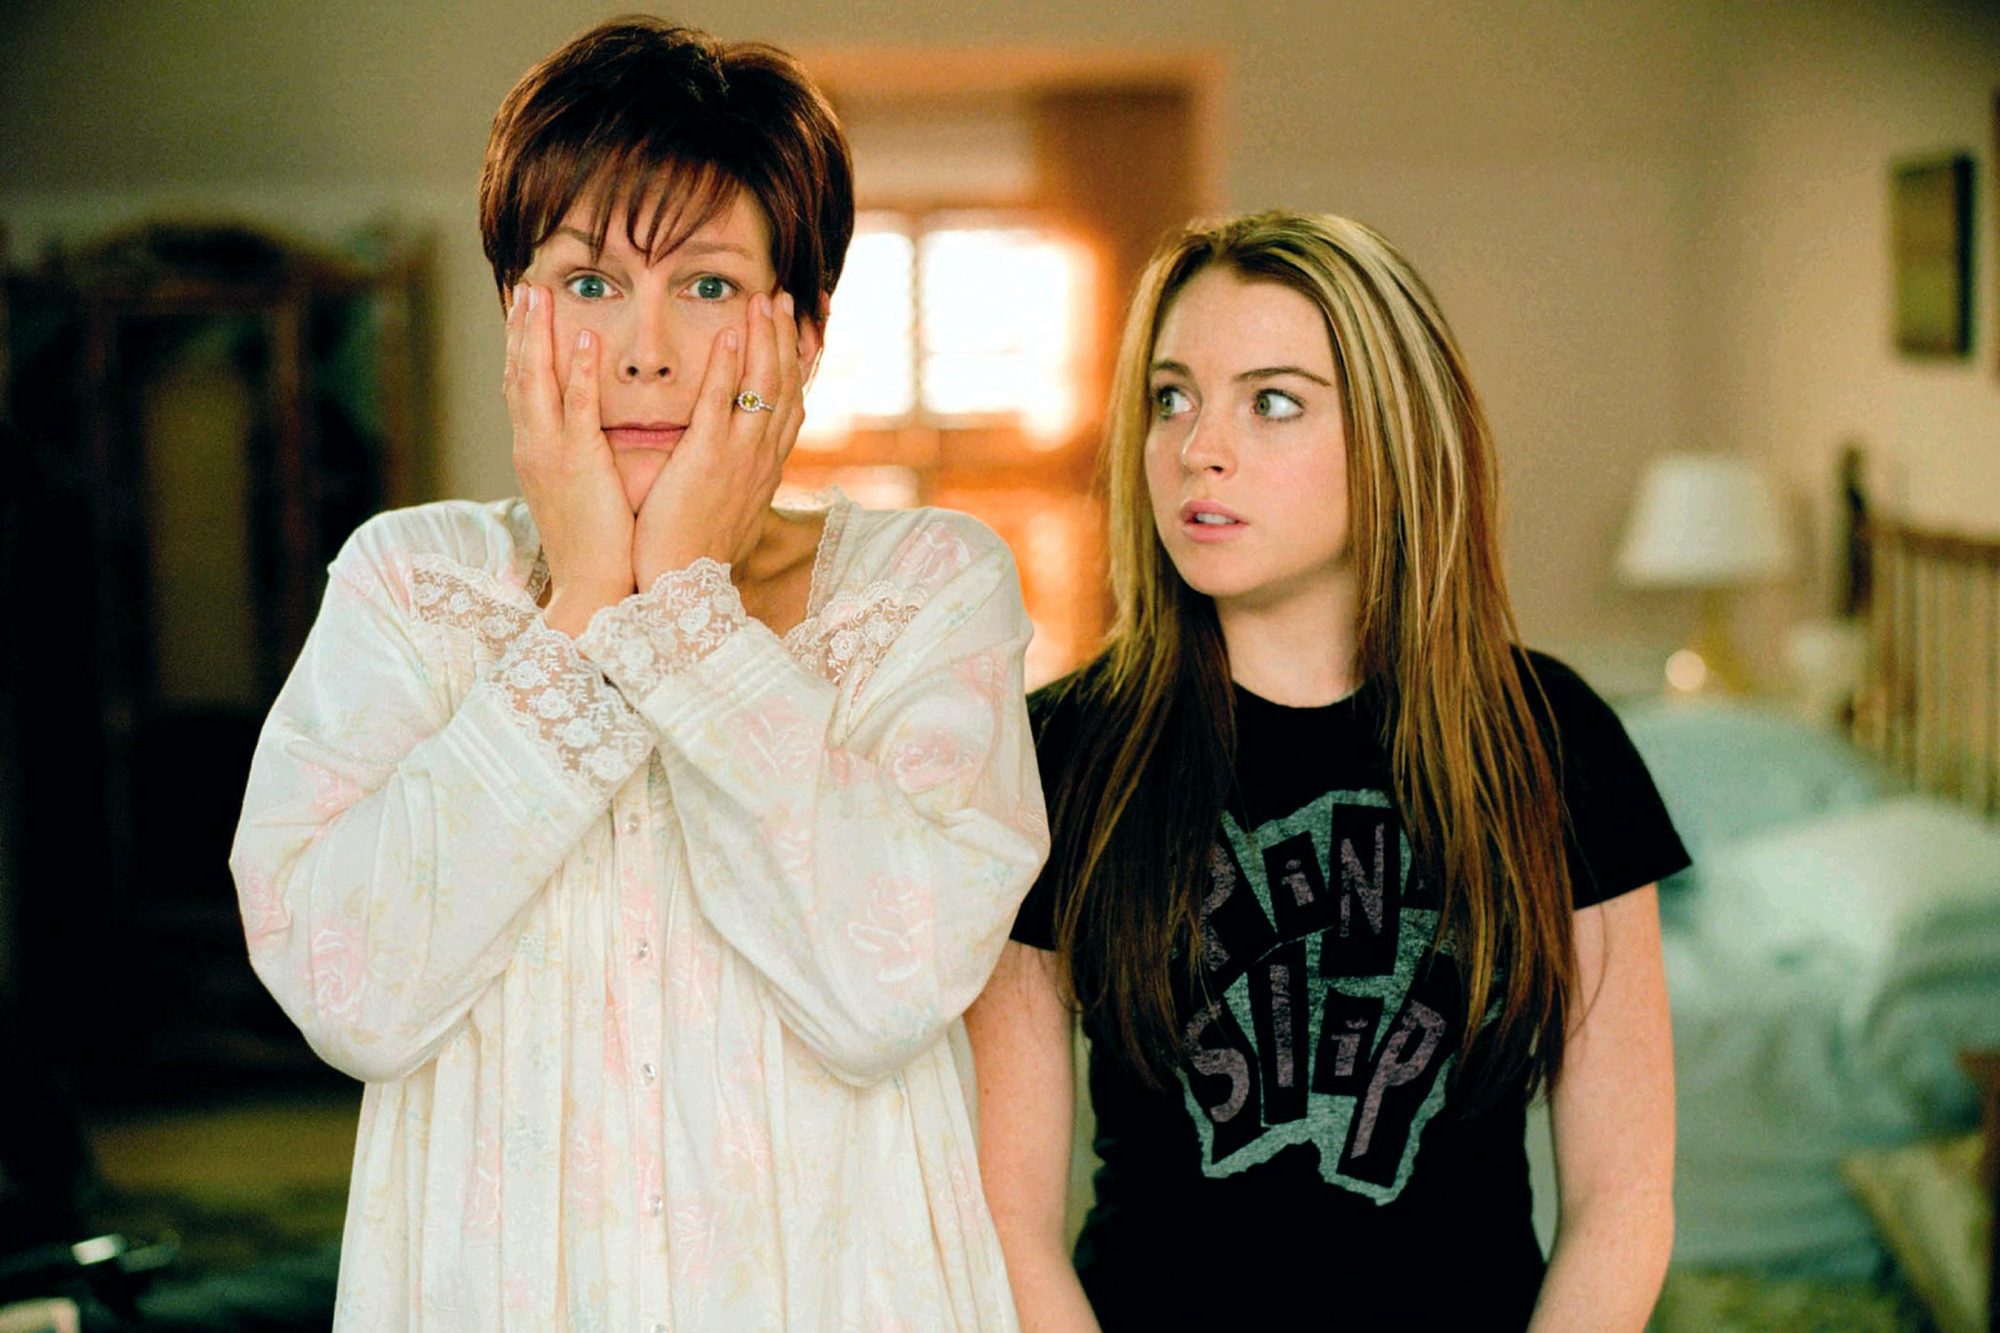 Jamie Lee Curtis and Lindsay Lohan in 'Freaky Friday'